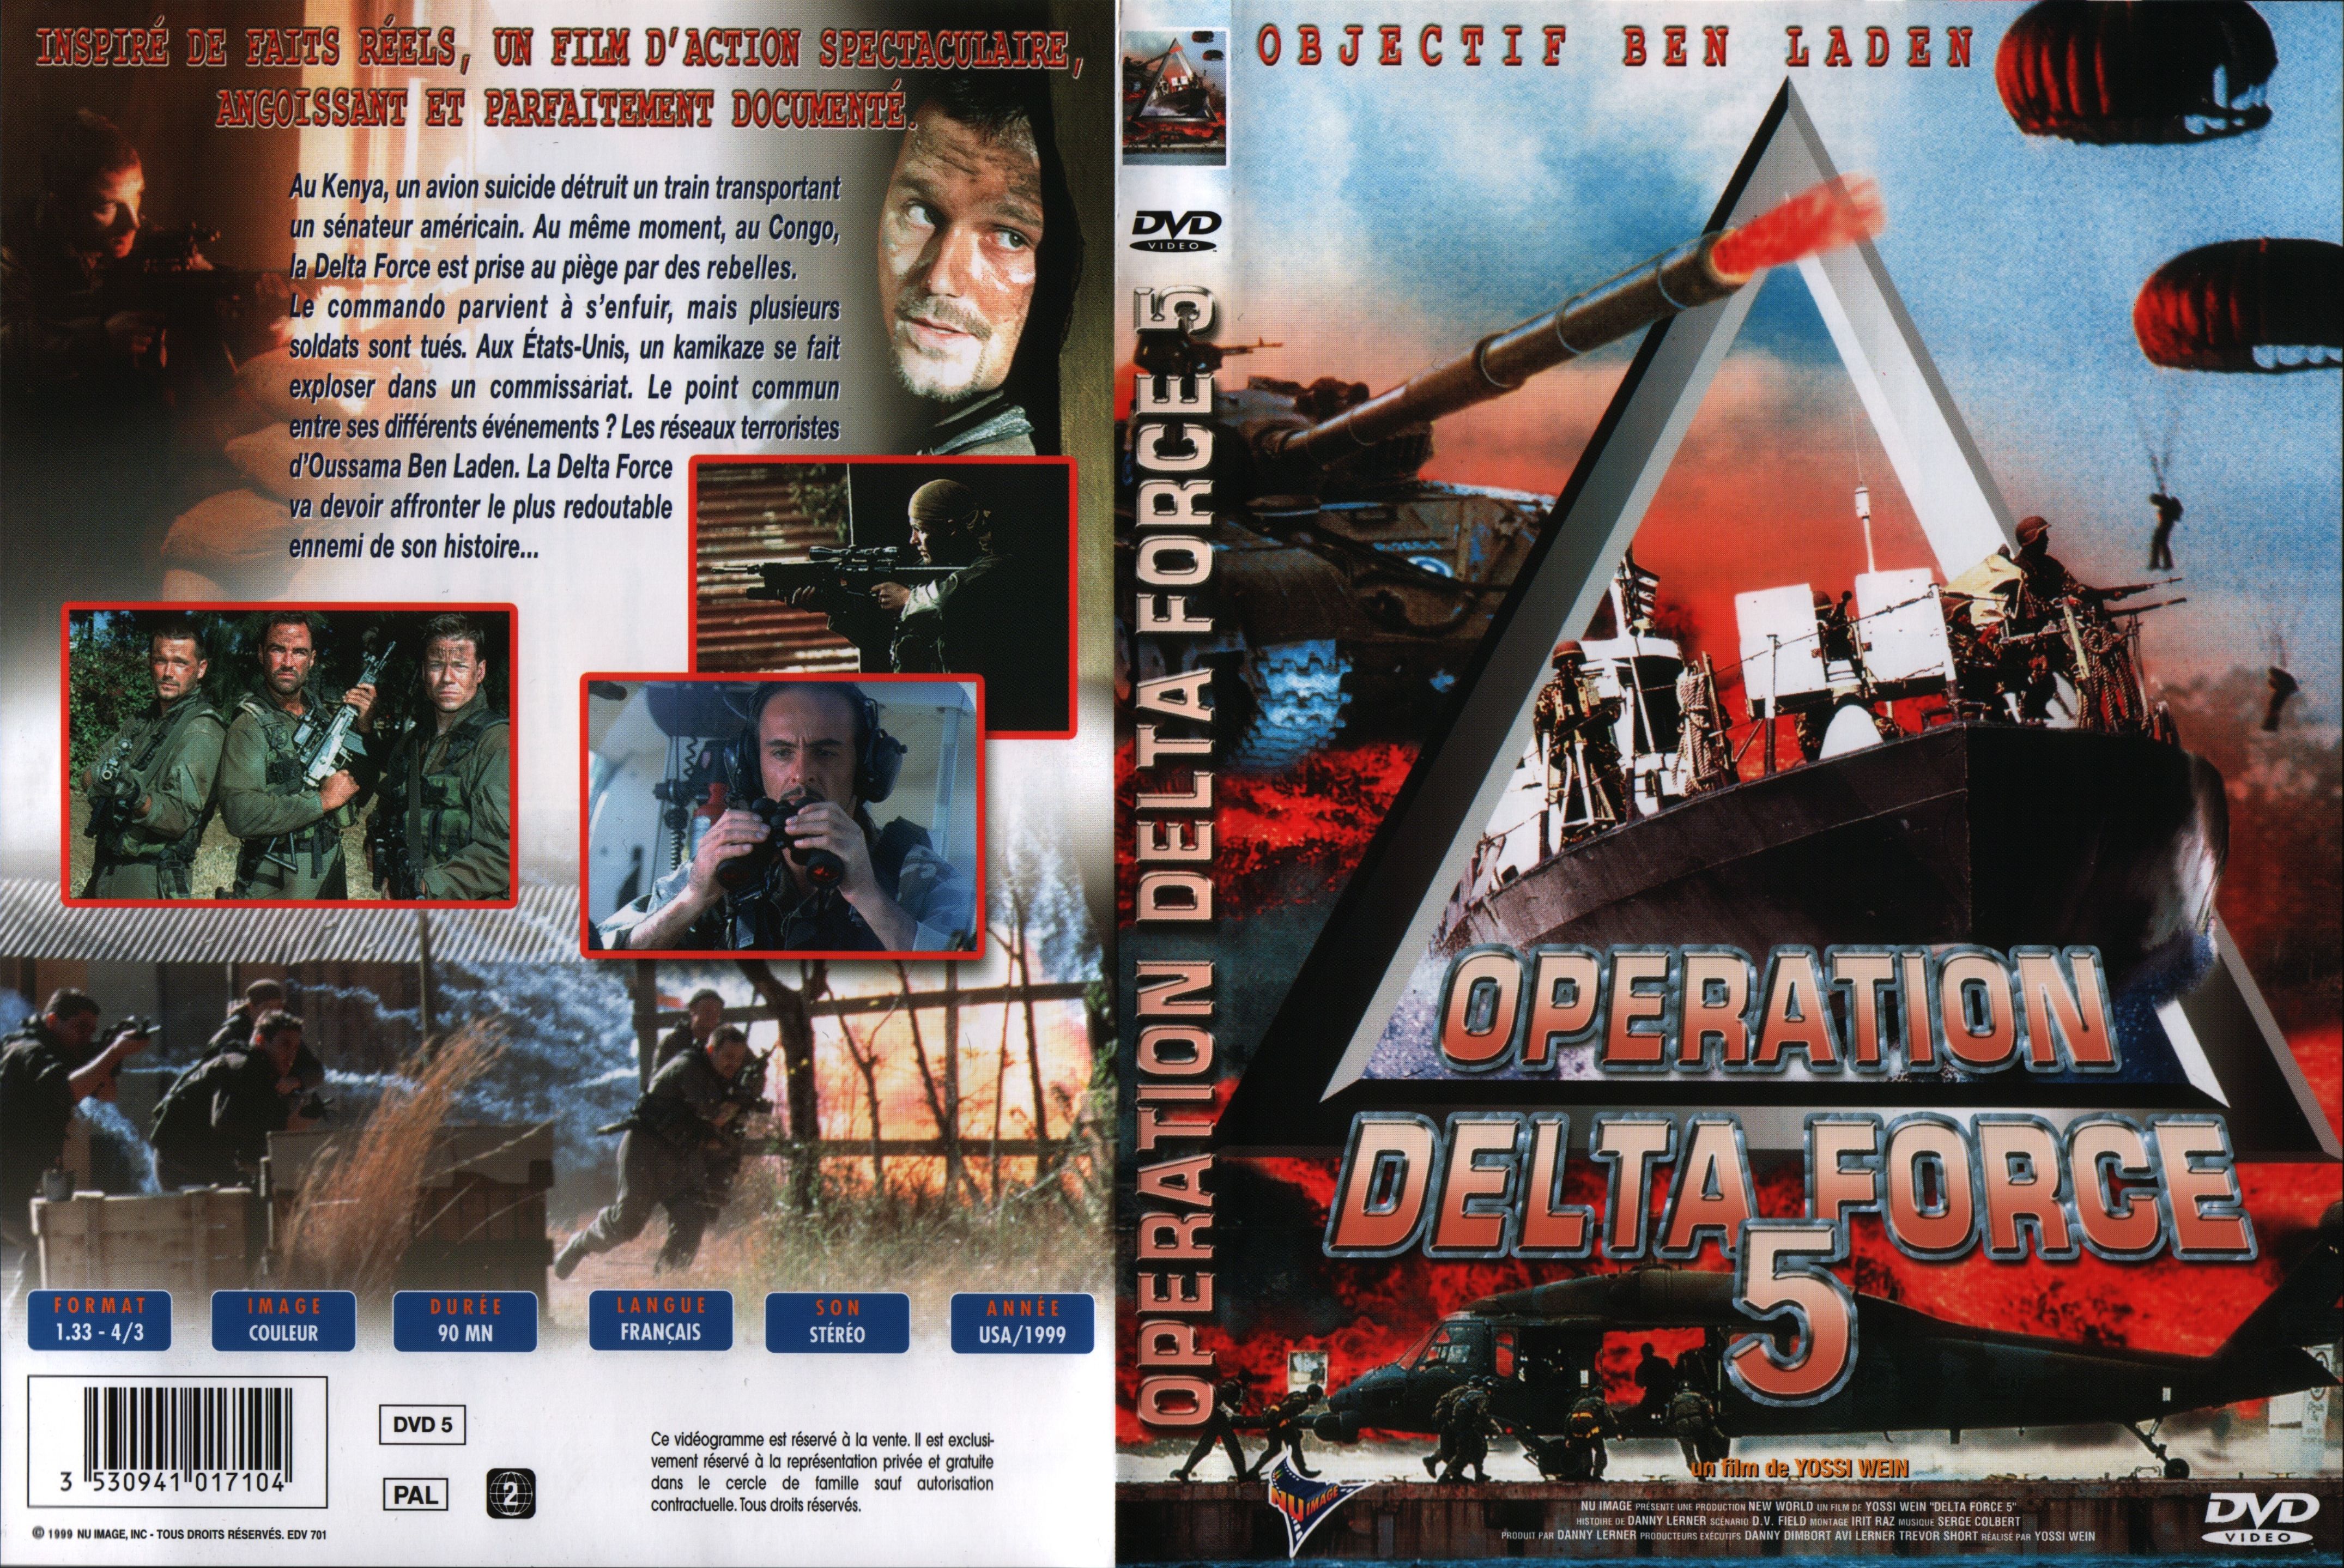 Jaquette DVD Opration delta force 5